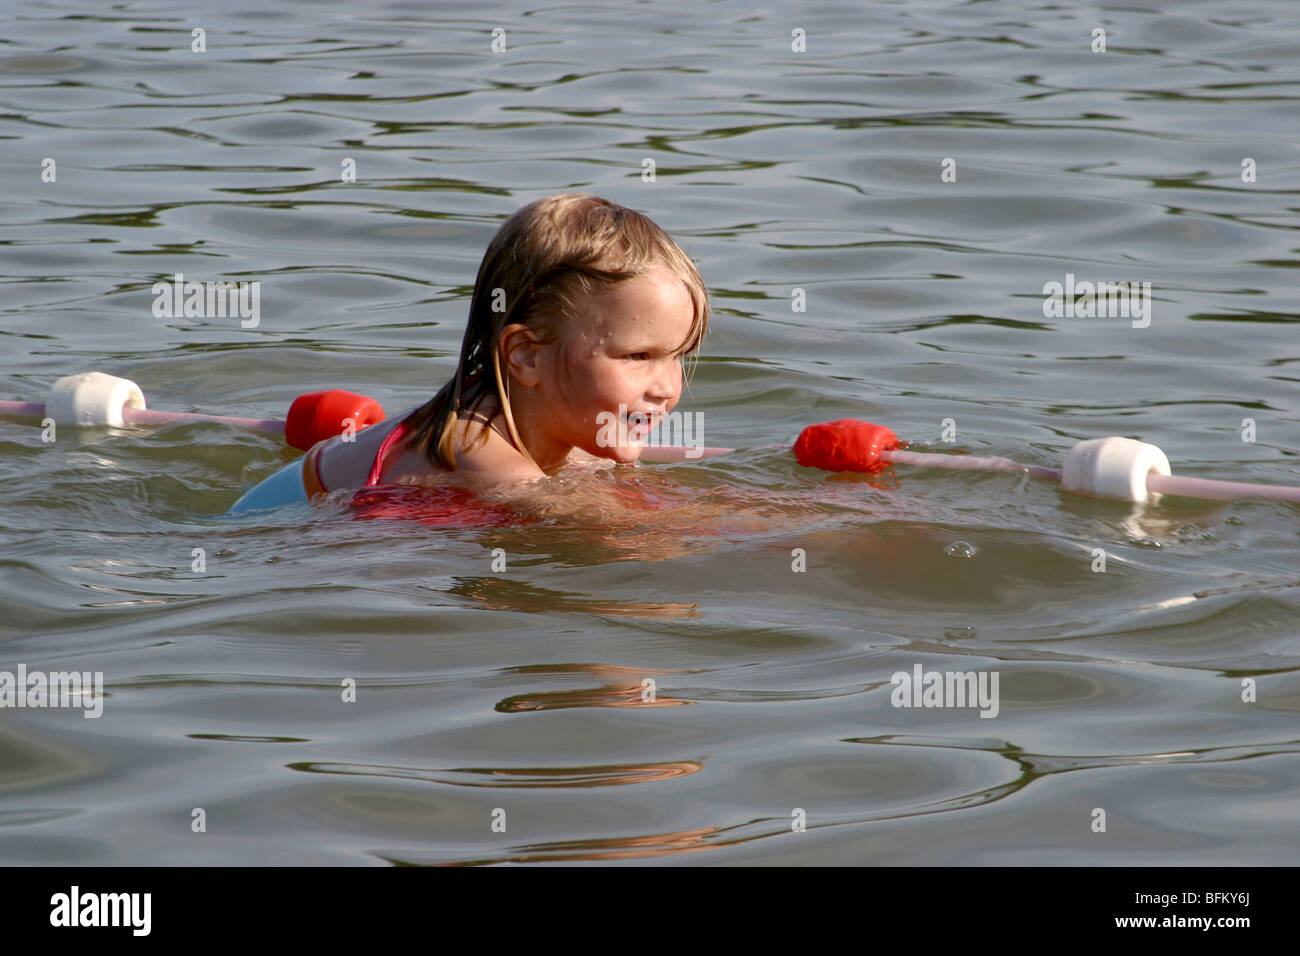 Chica con dispositivo floatable de natación en aguas abiertas. Foto de stock